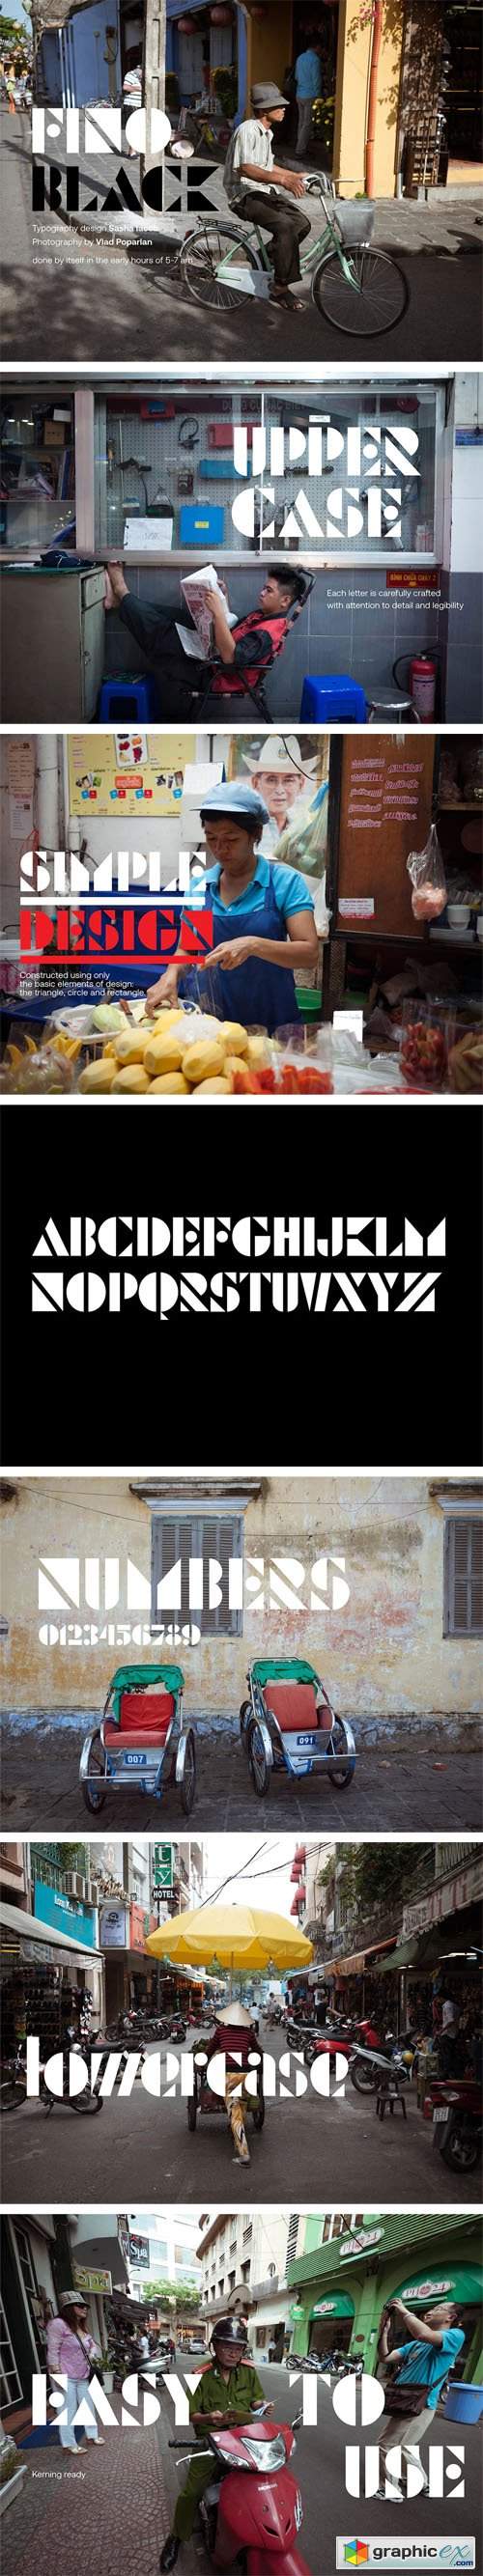  Fino Black - Display Typeface 